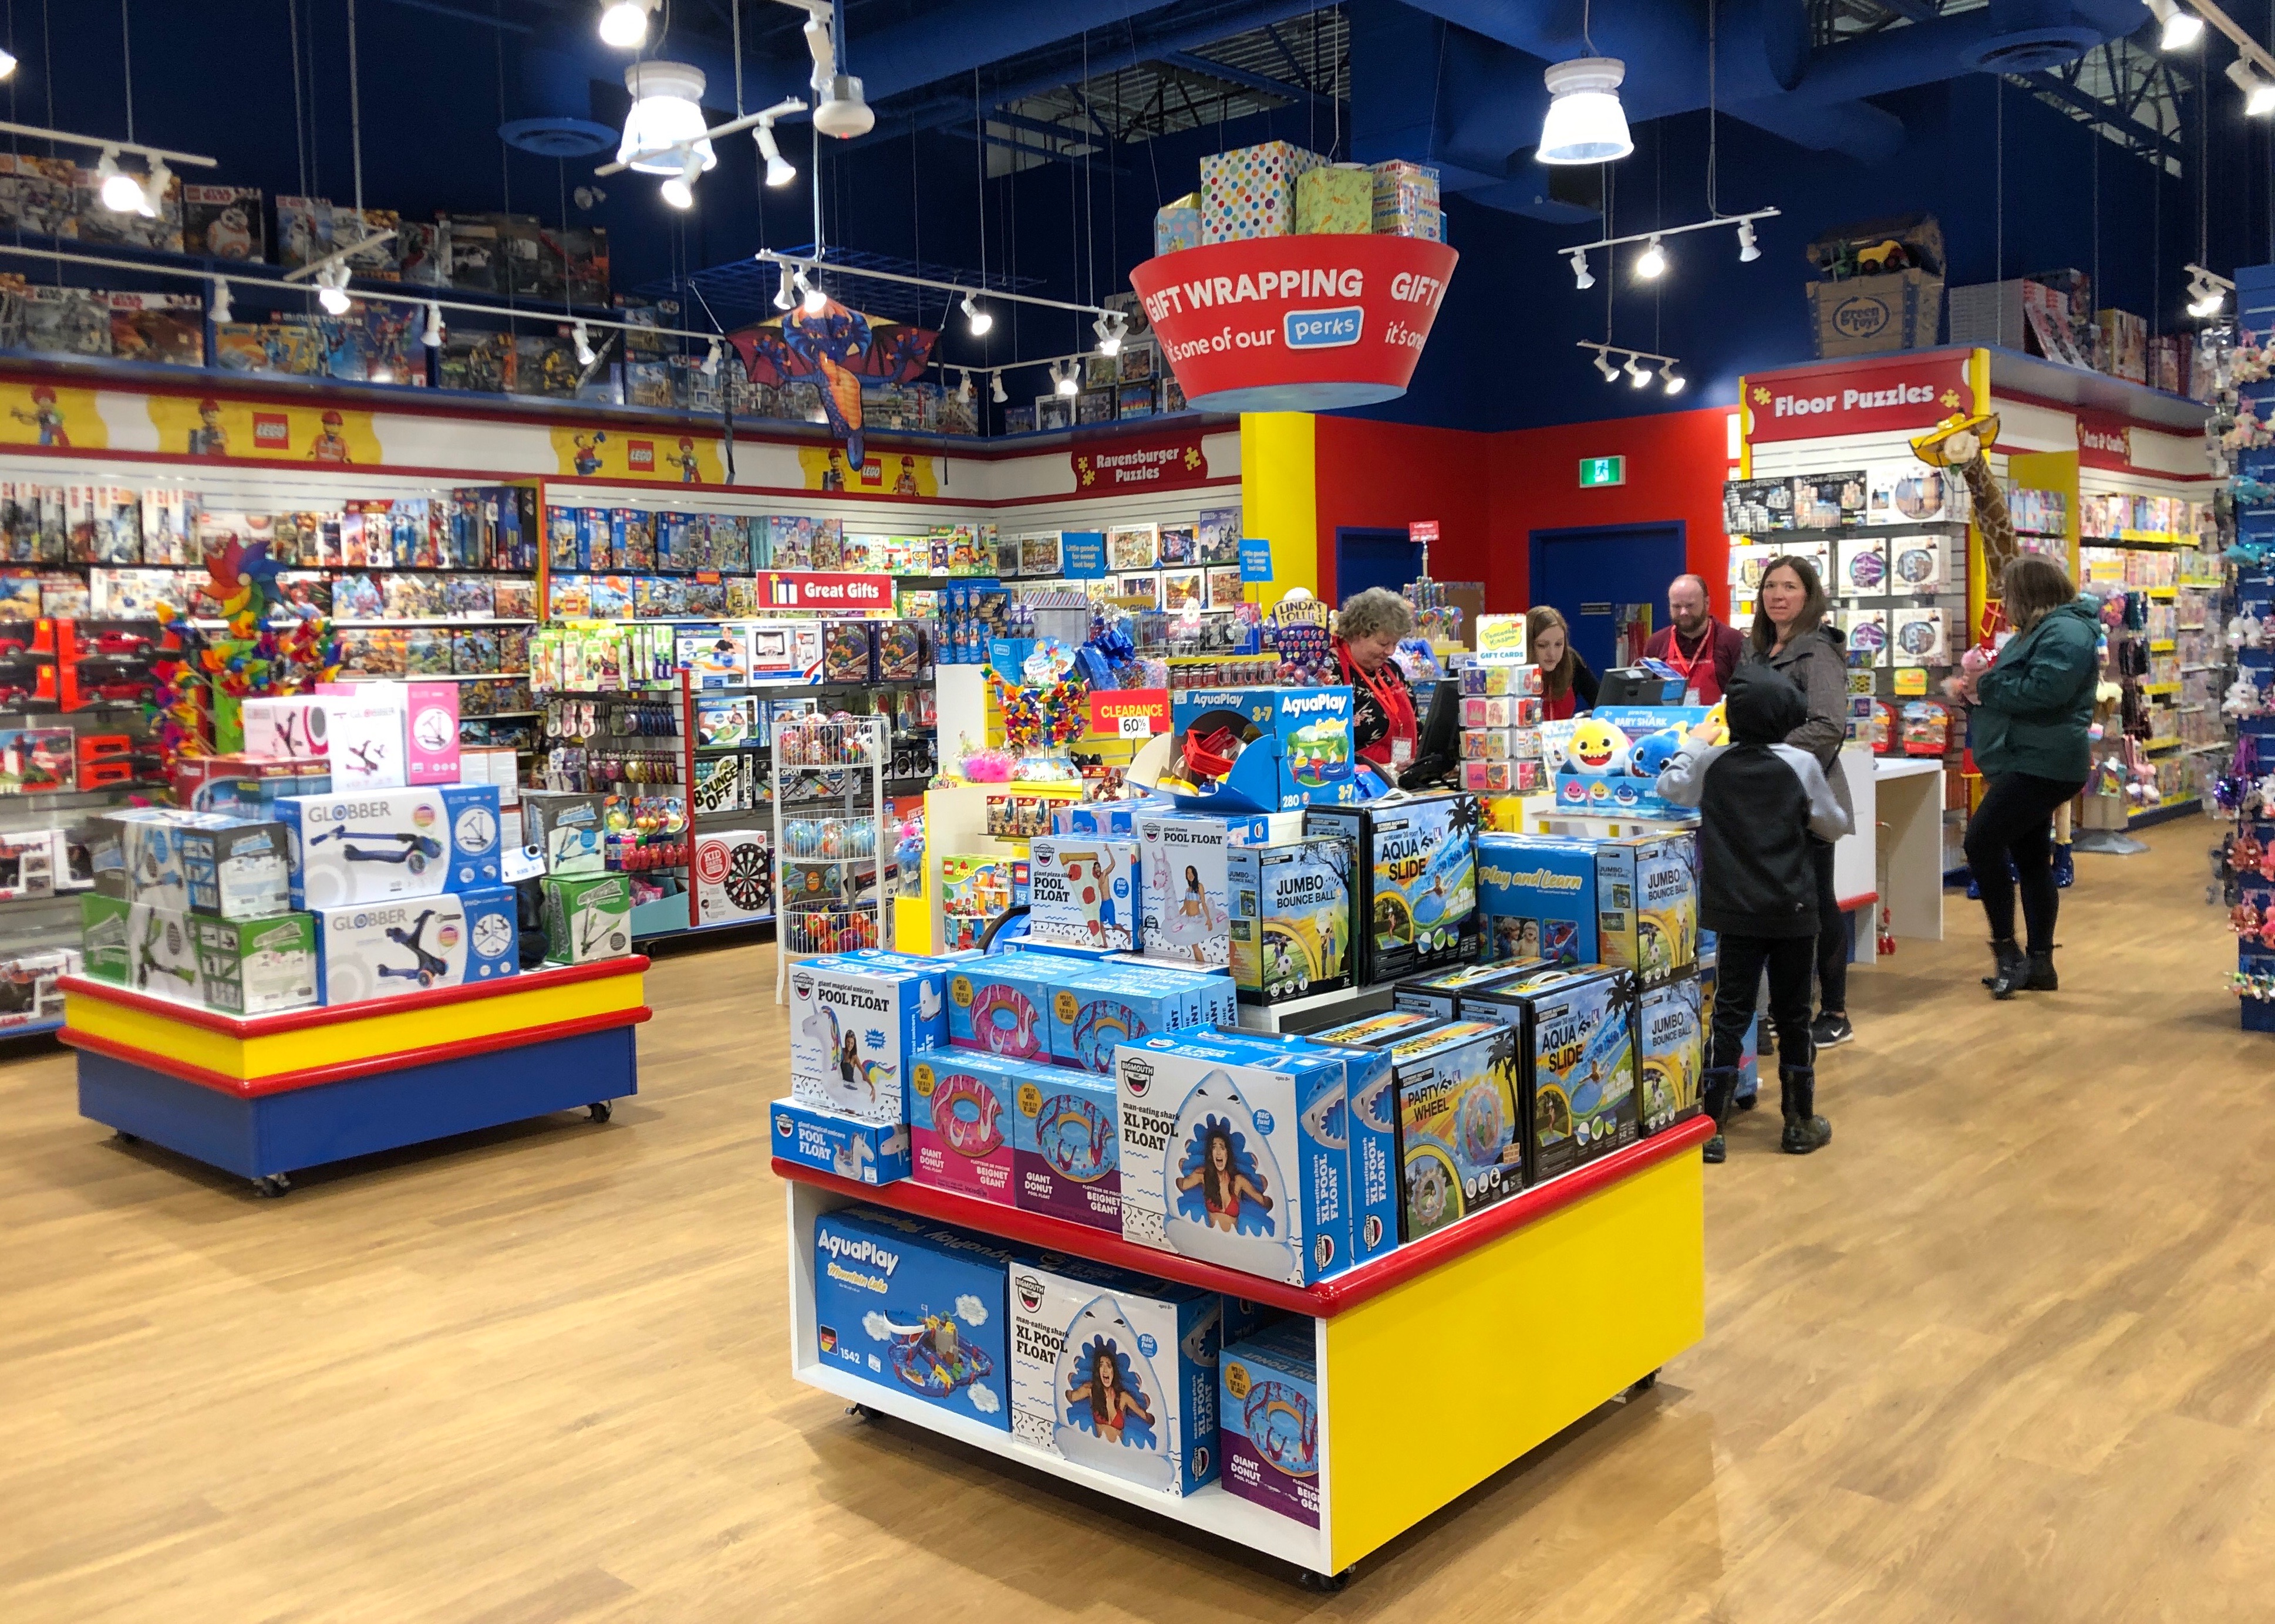 mastermind toys warehouse sale 2019